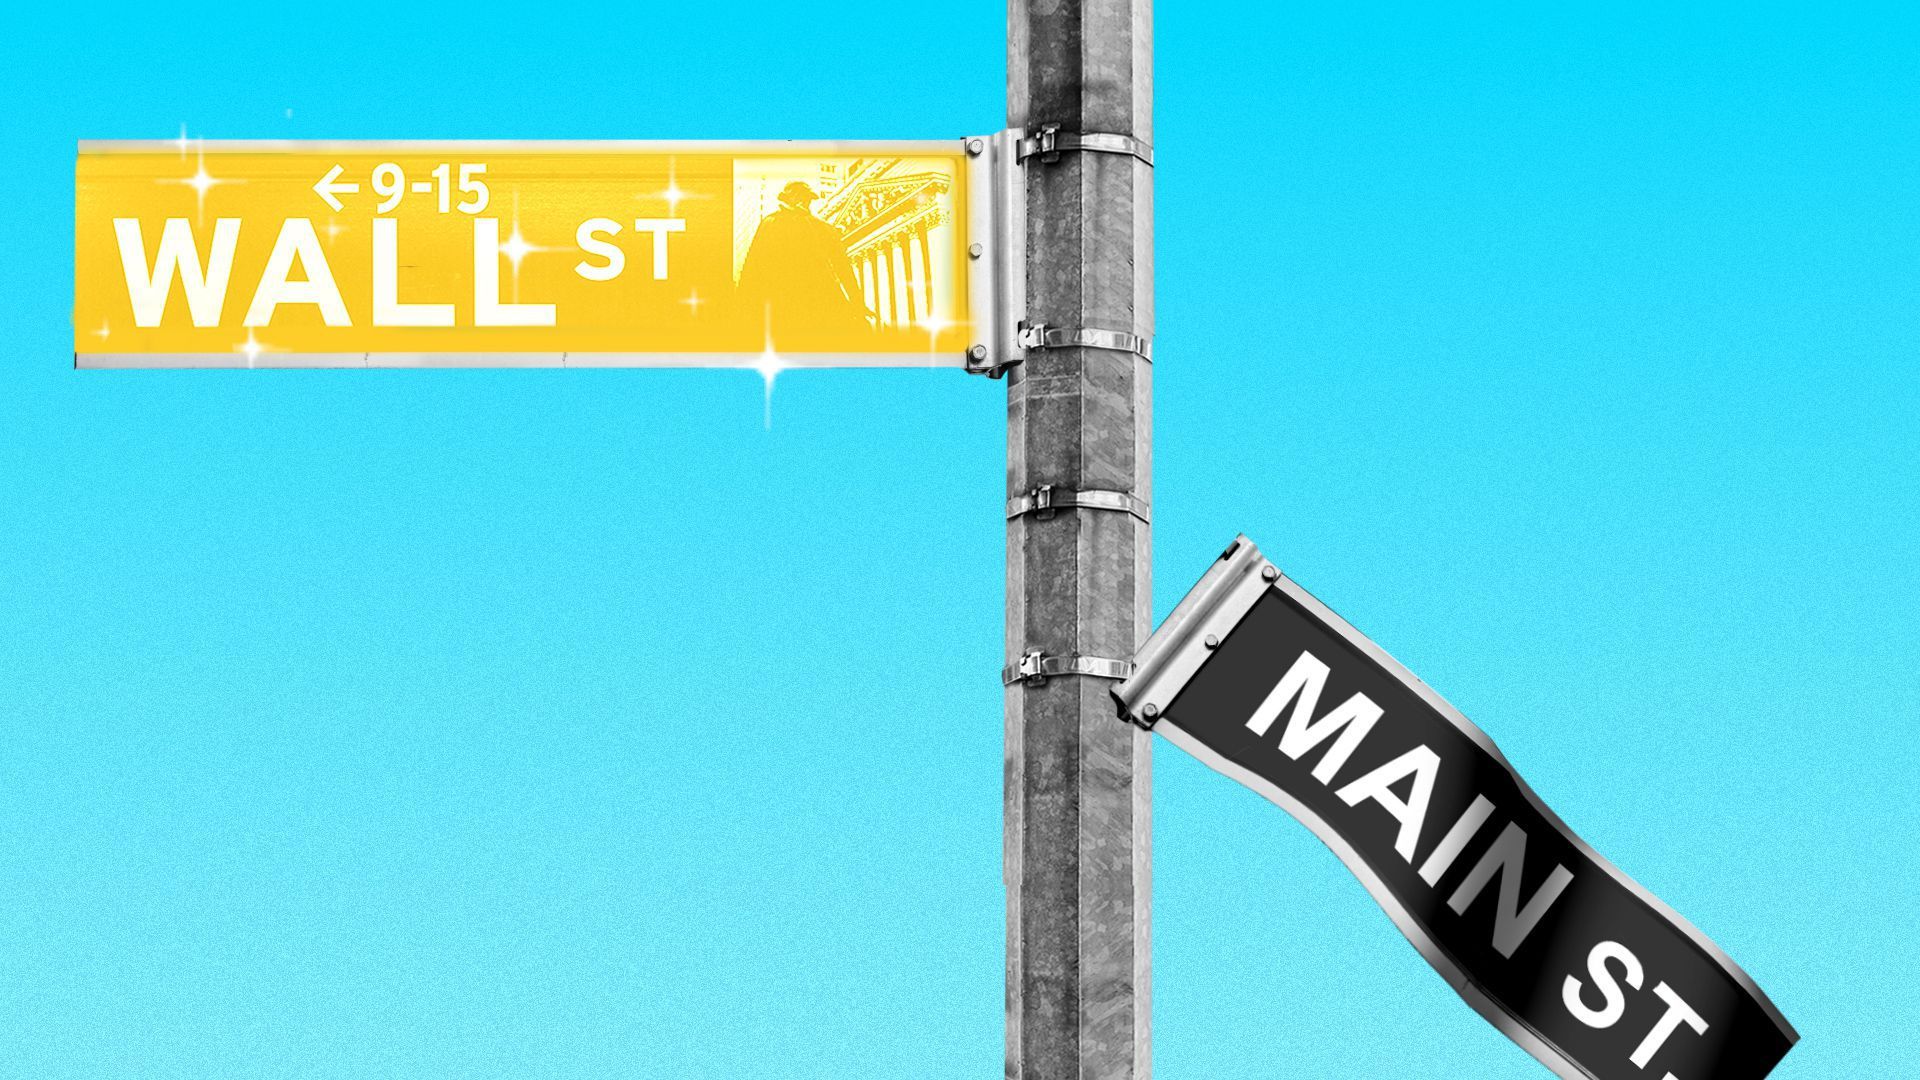 Wall Street sign and Main Street sign crumpling